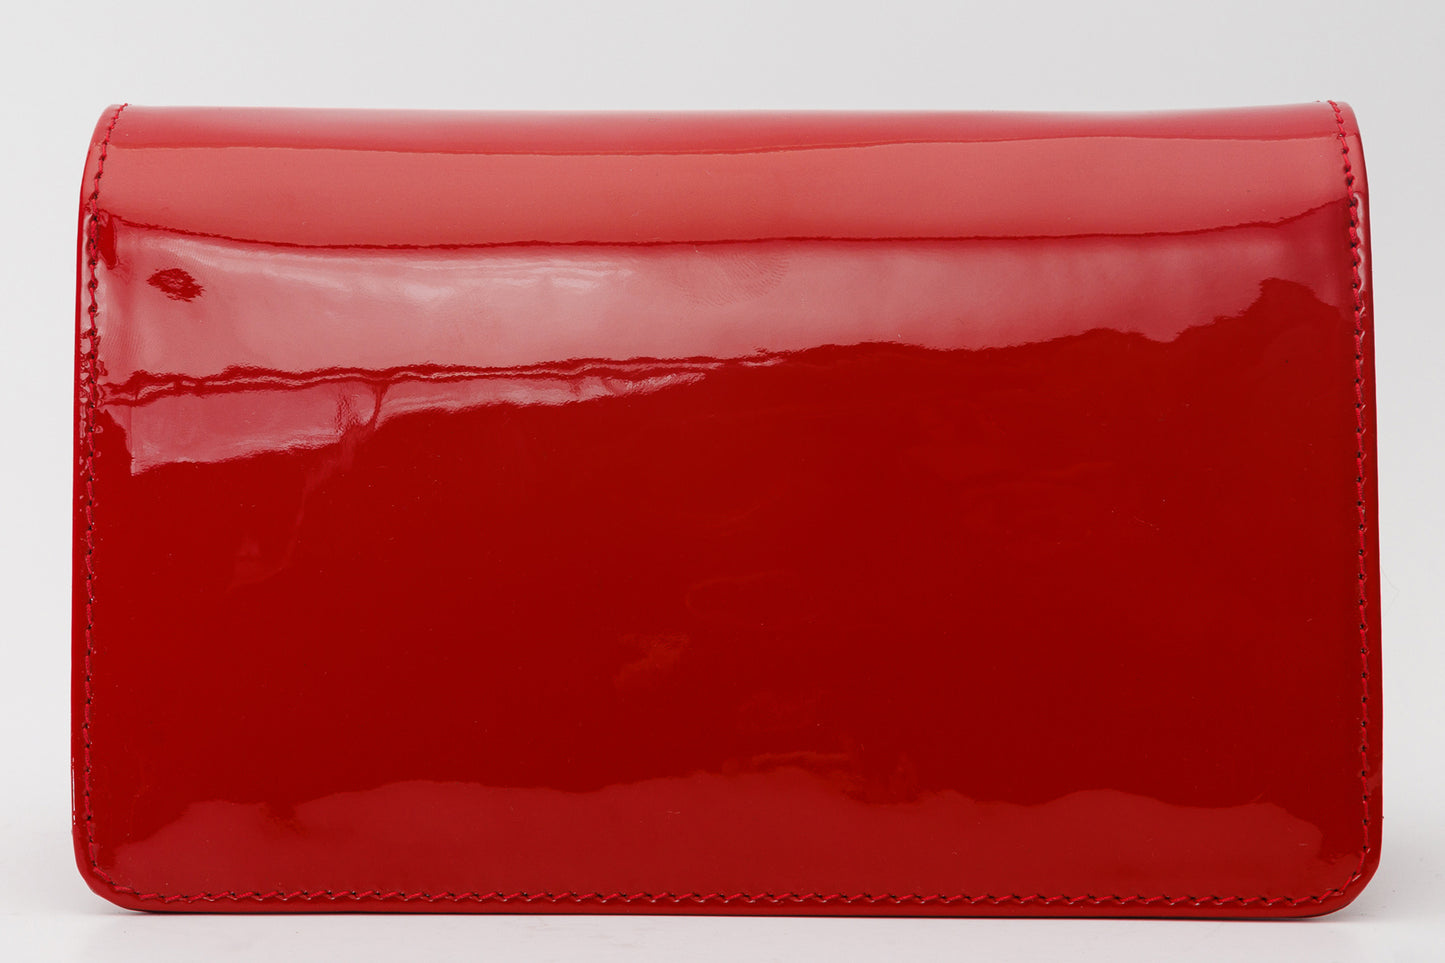 The Vigo Red Patent Leather Hanbag